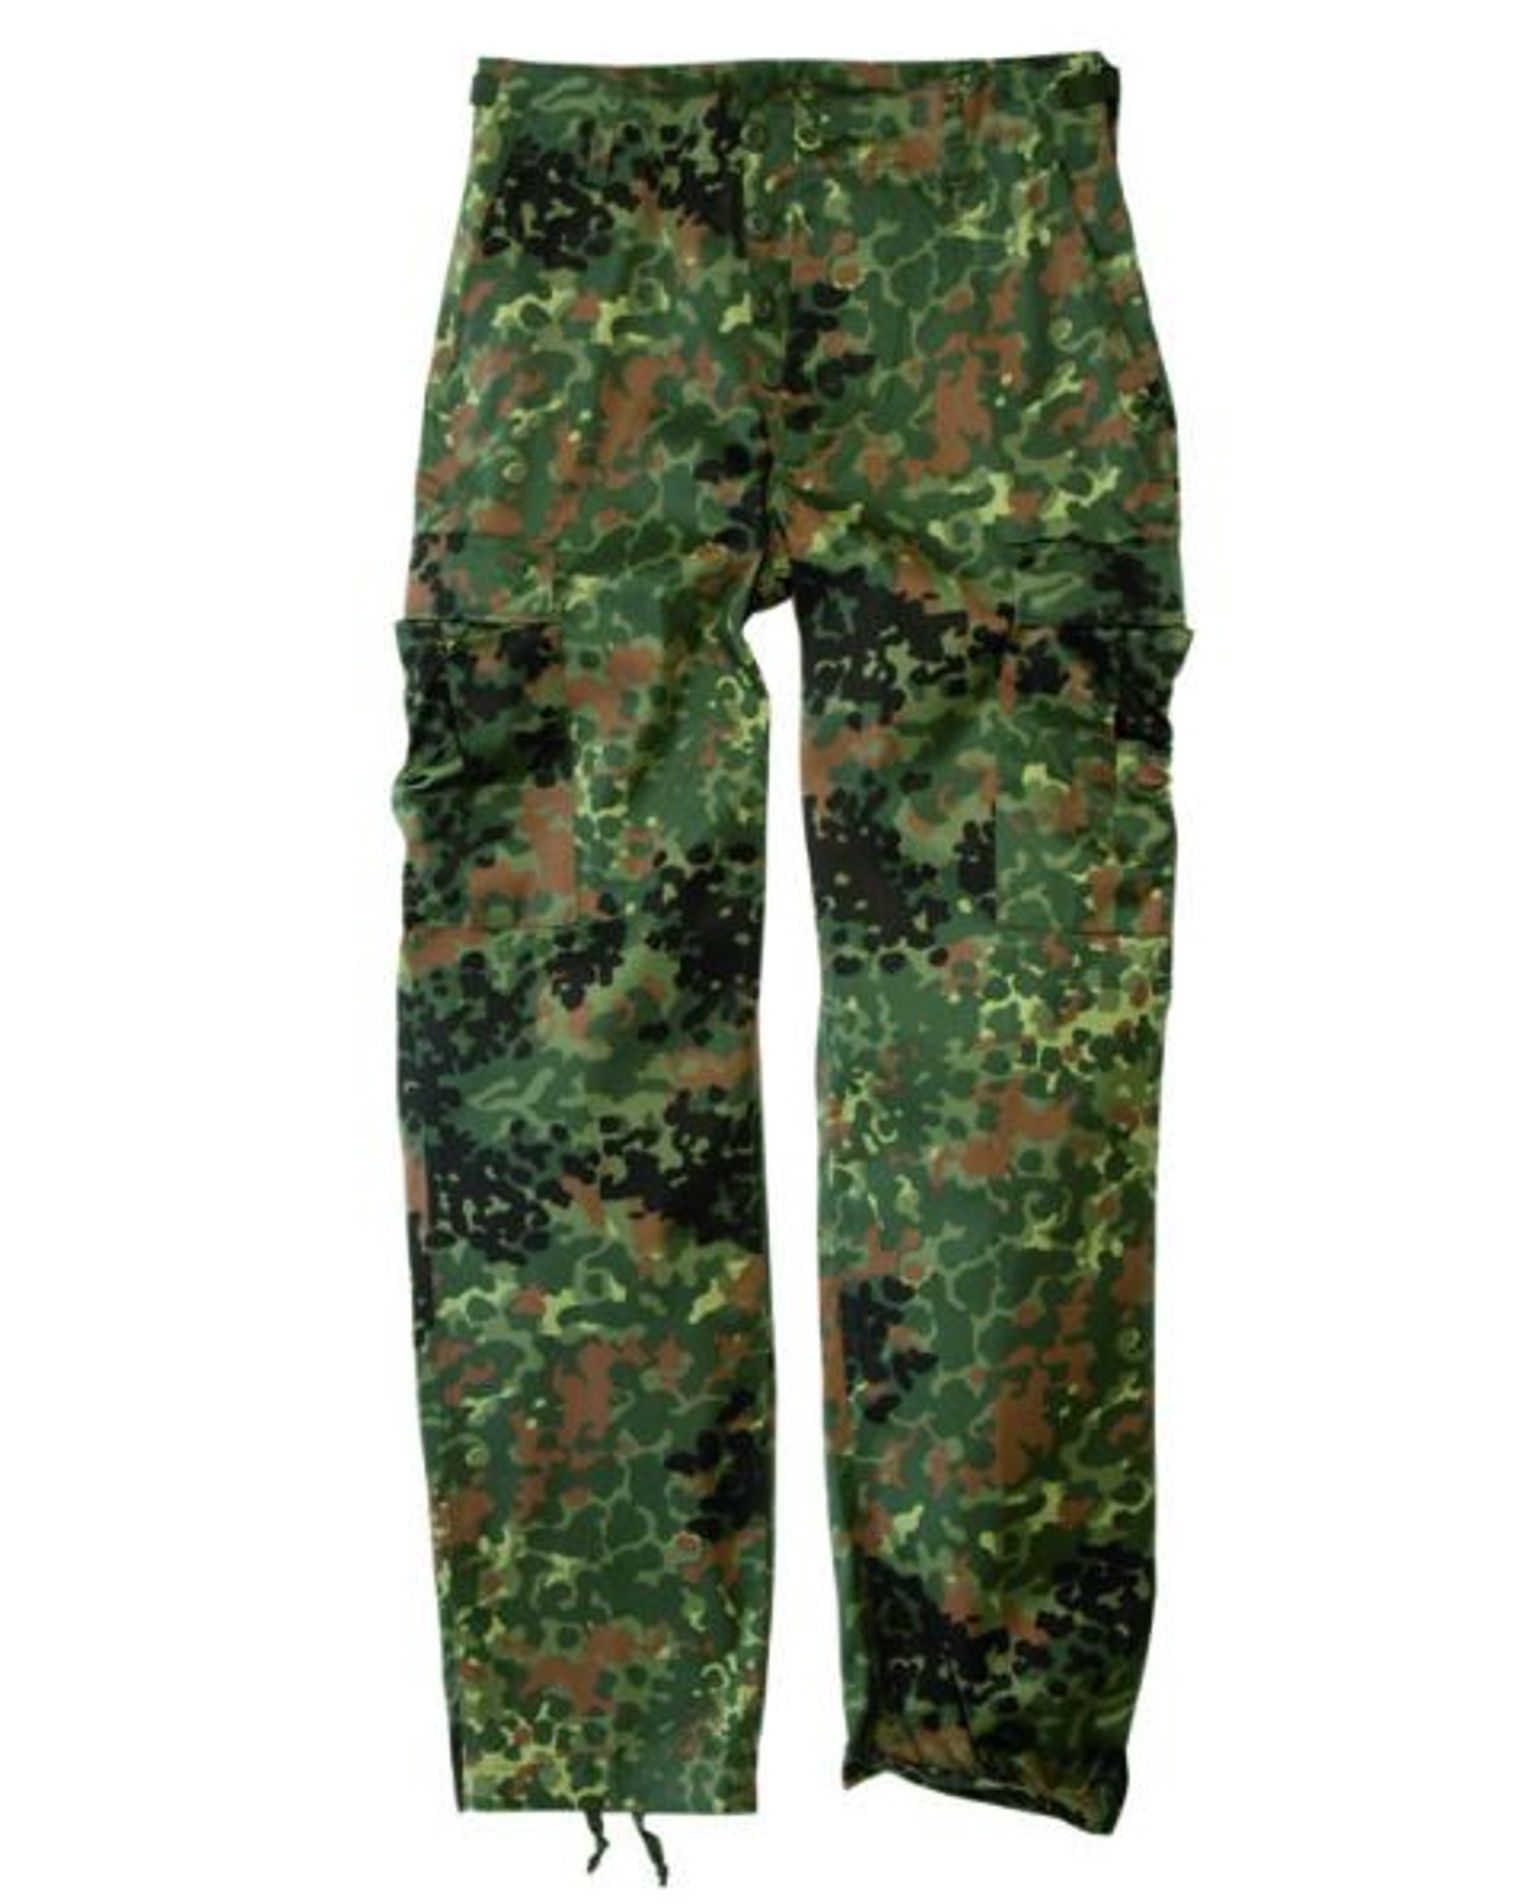 Mil-Tec Flectar Camo Ranger BDU Field Pants